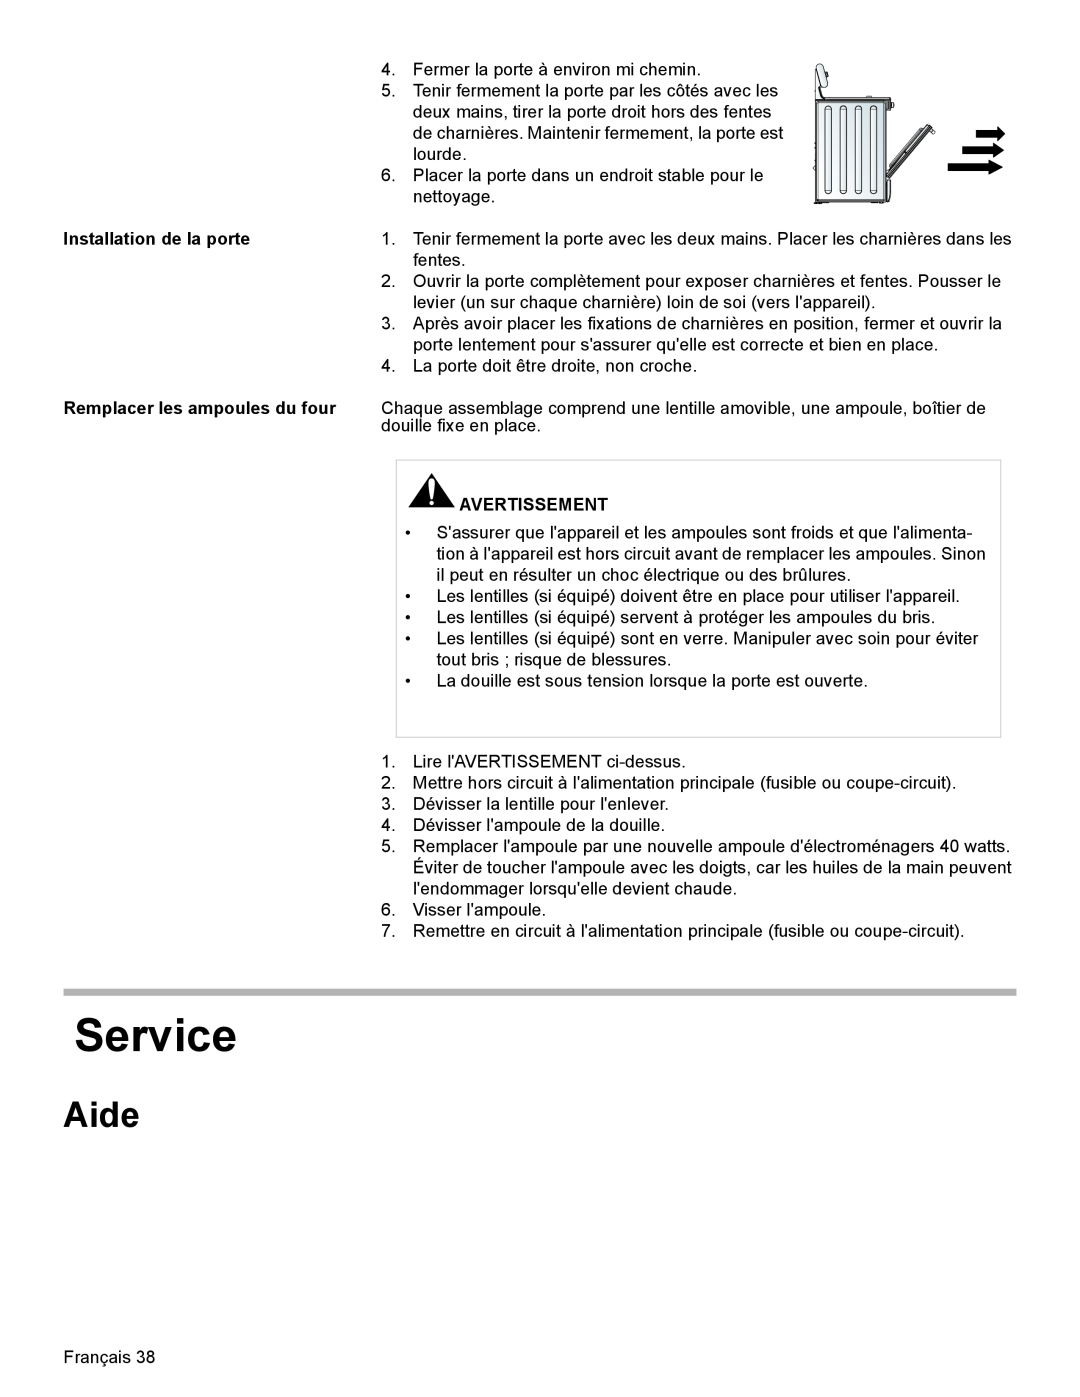 Bosch Appliances HES7282U manual Aide, Service, Installation de la porte, Avertissement 